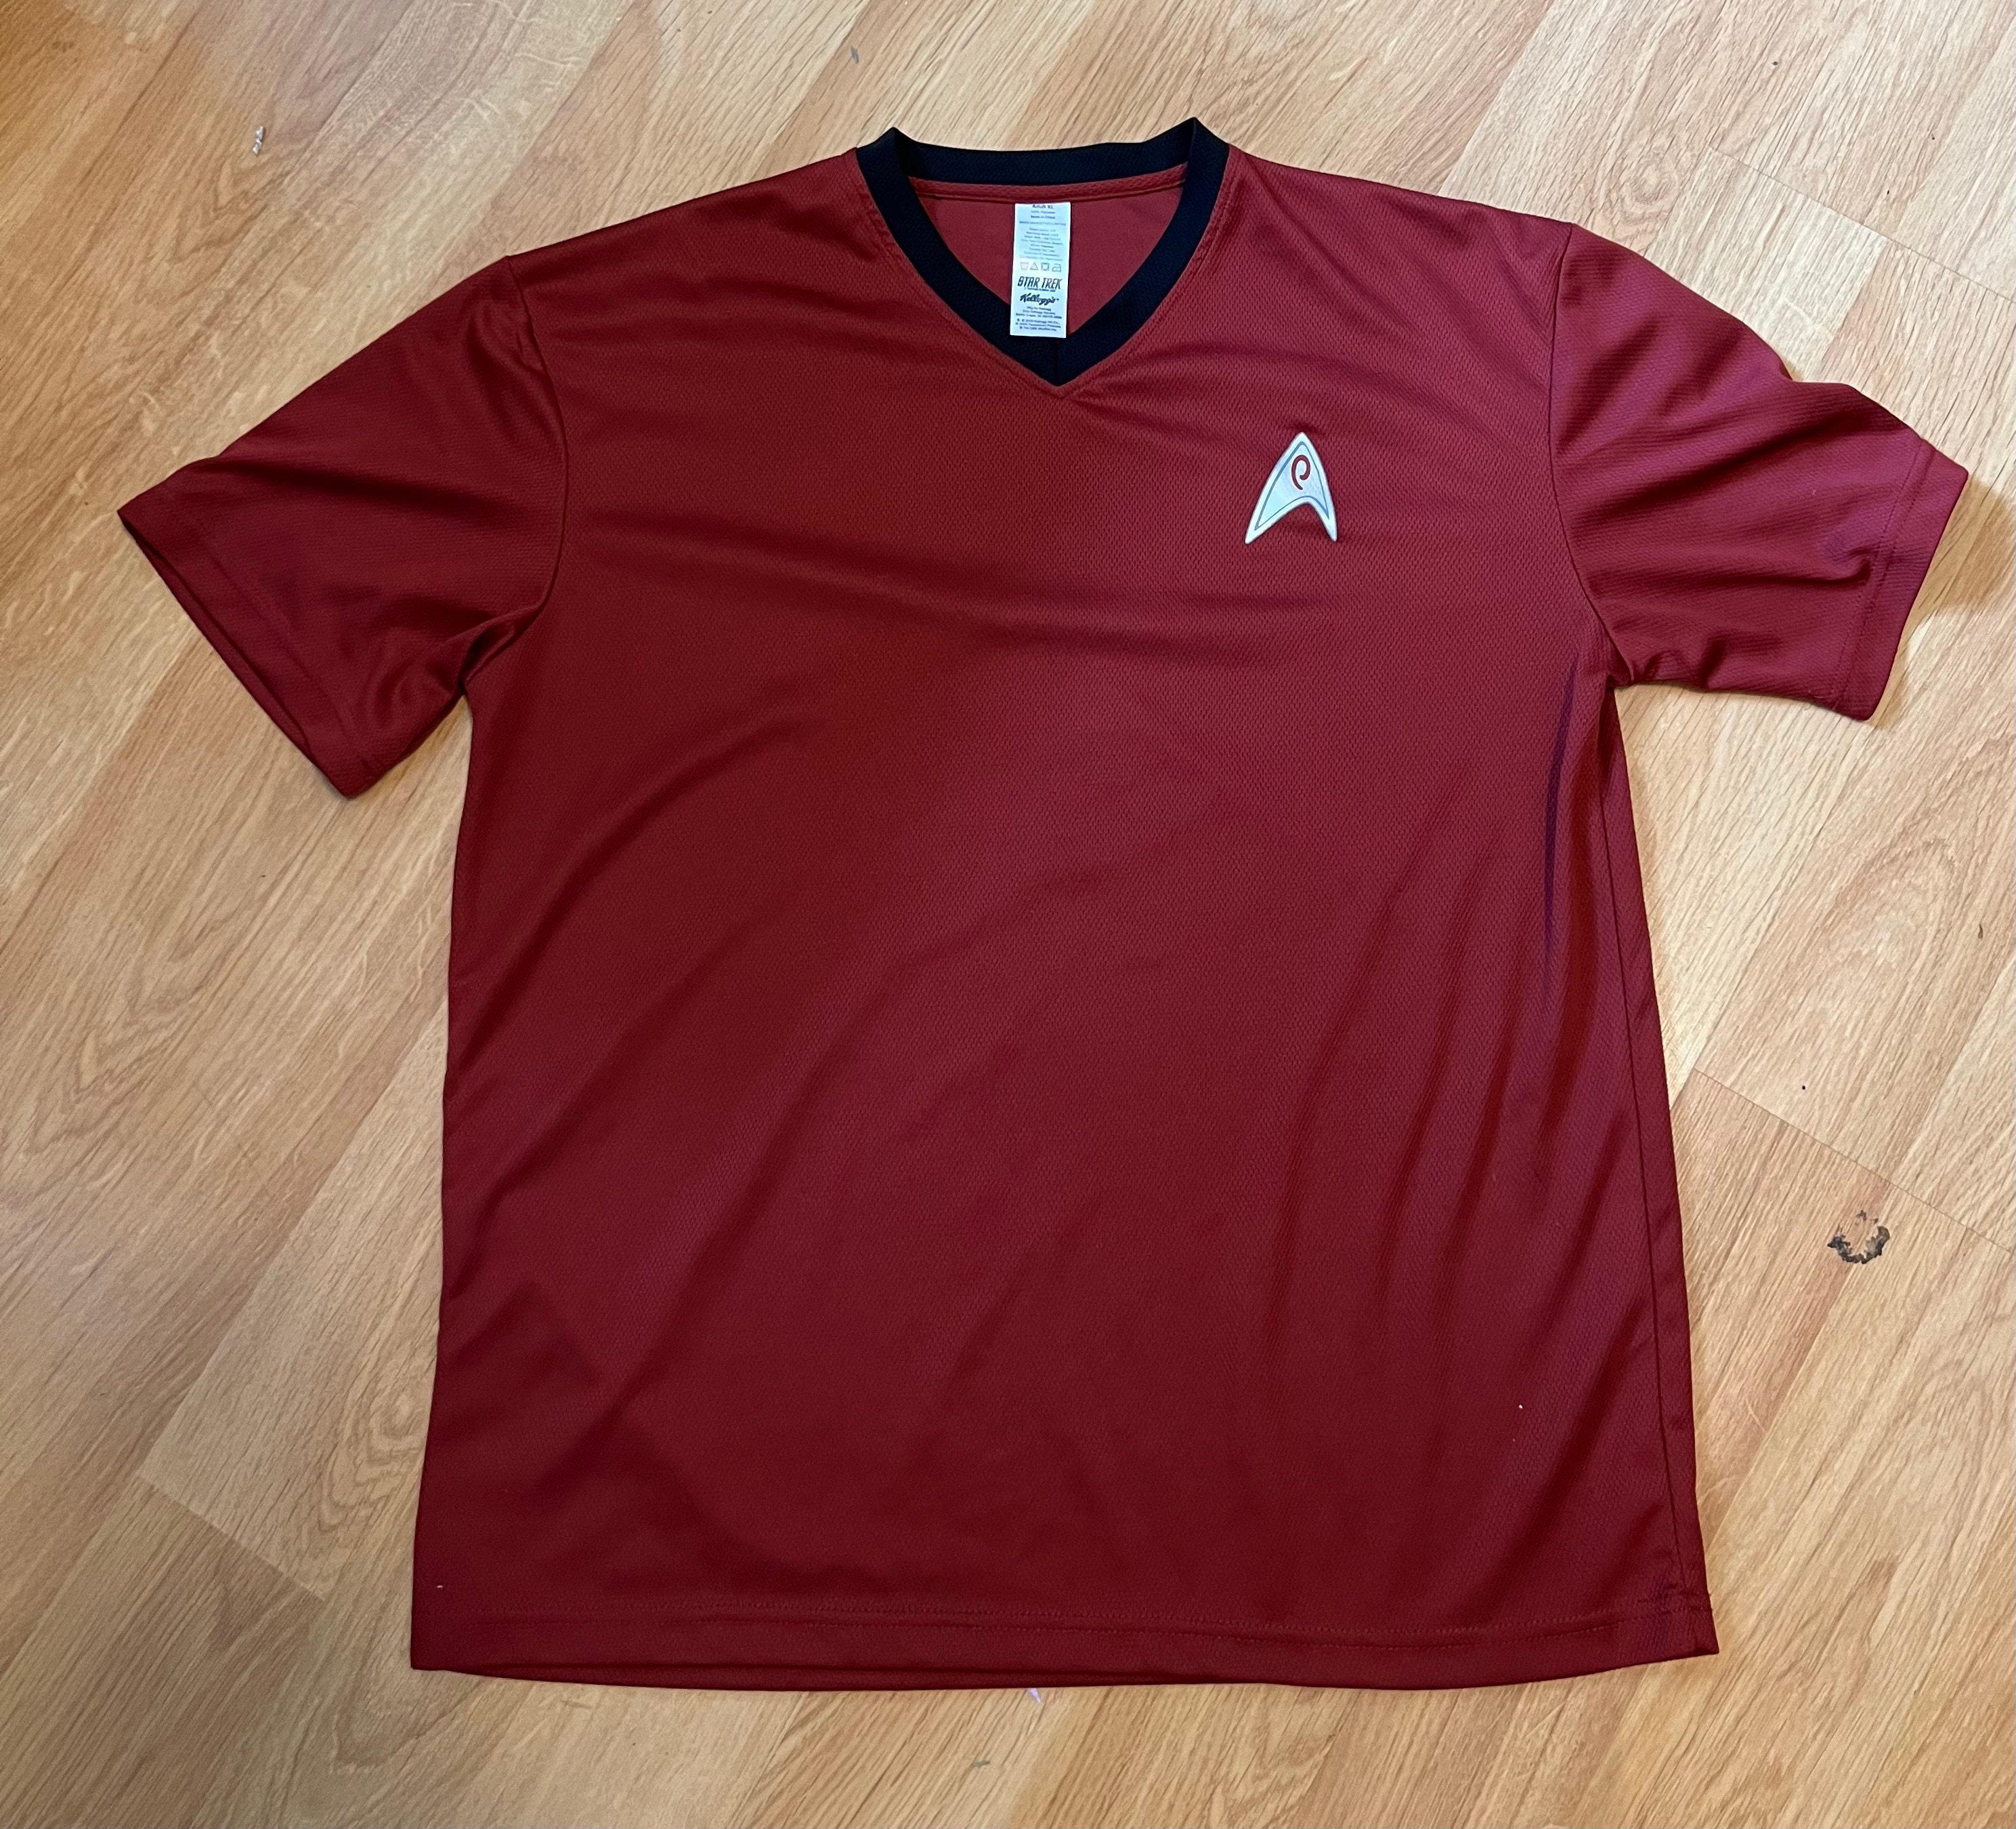 Vintage Star Trek T-Shirt Unique Star Trek Gifts - Personalized